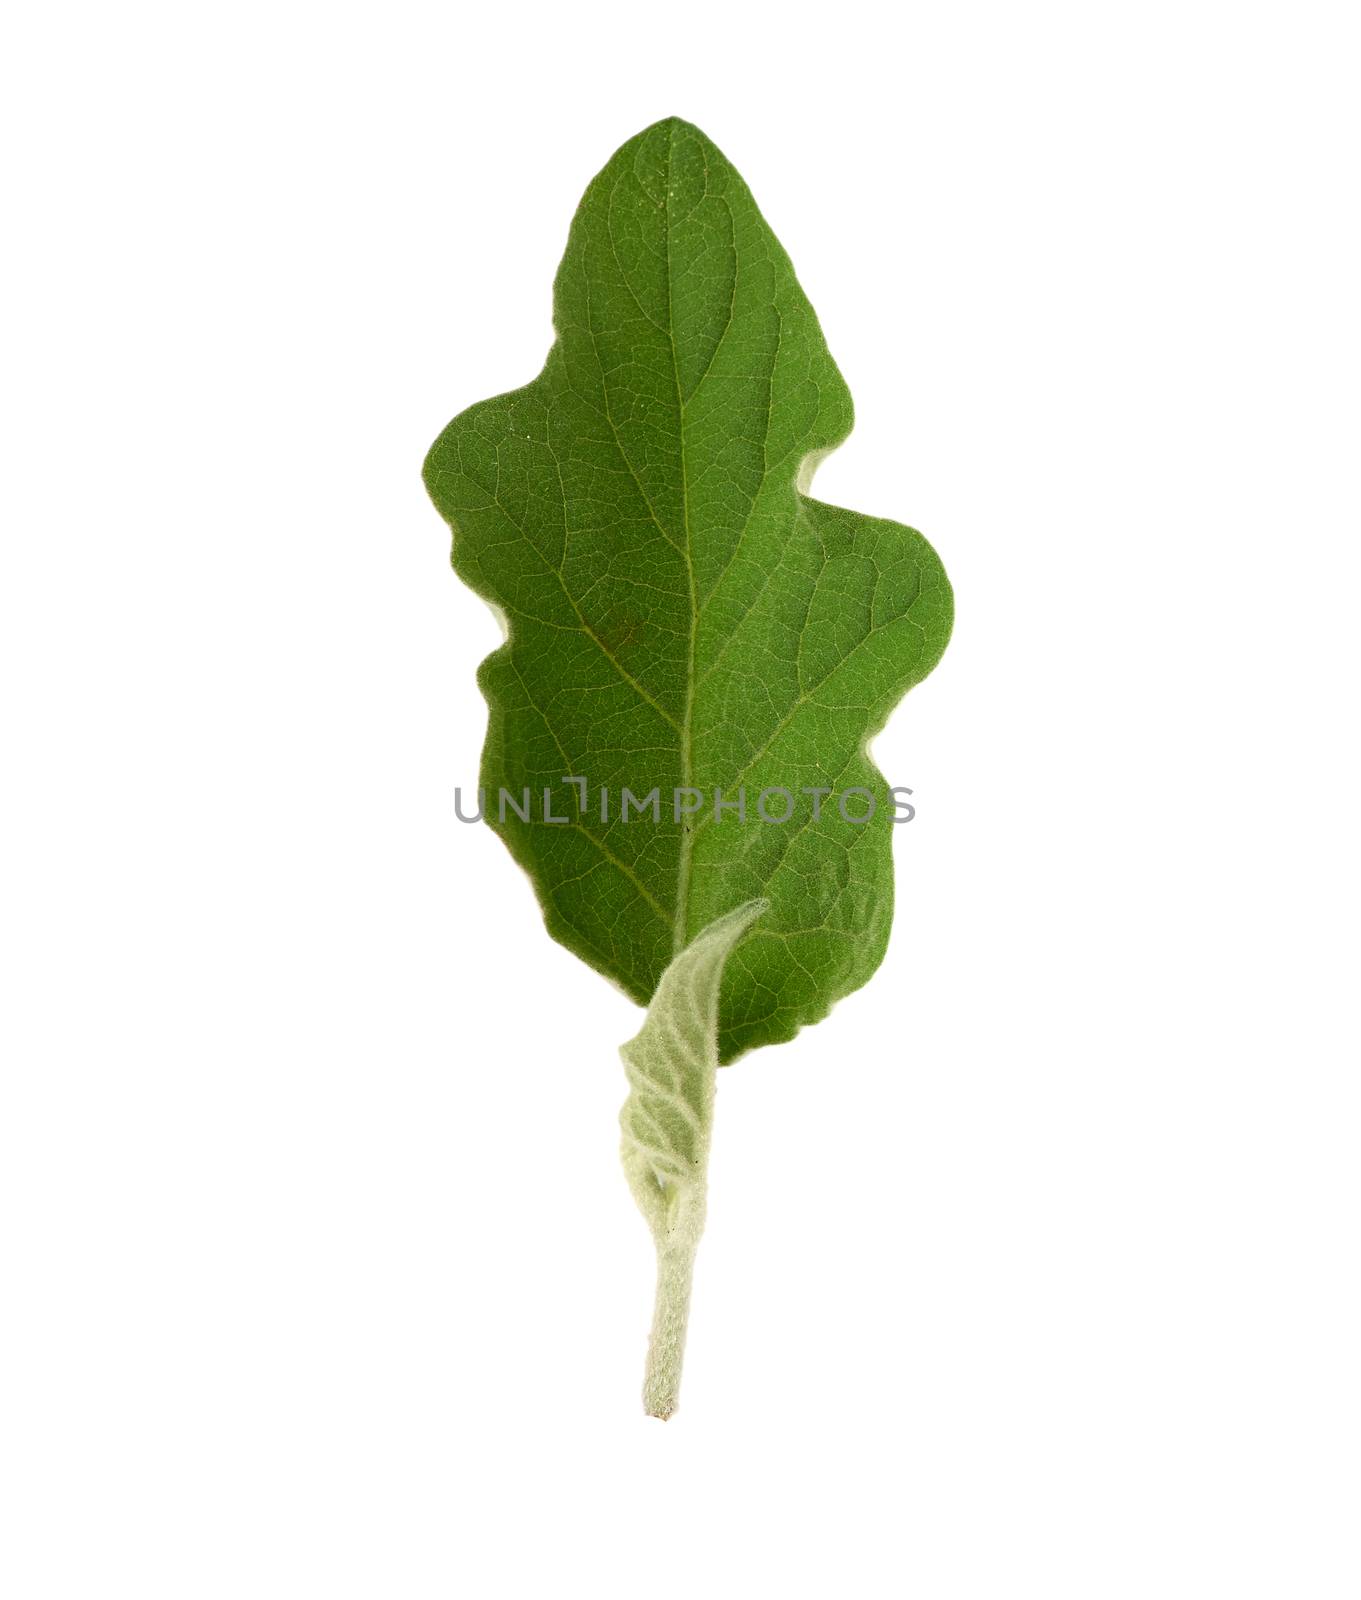 fresh green leaf eggplant isolated on a white background by ndanko